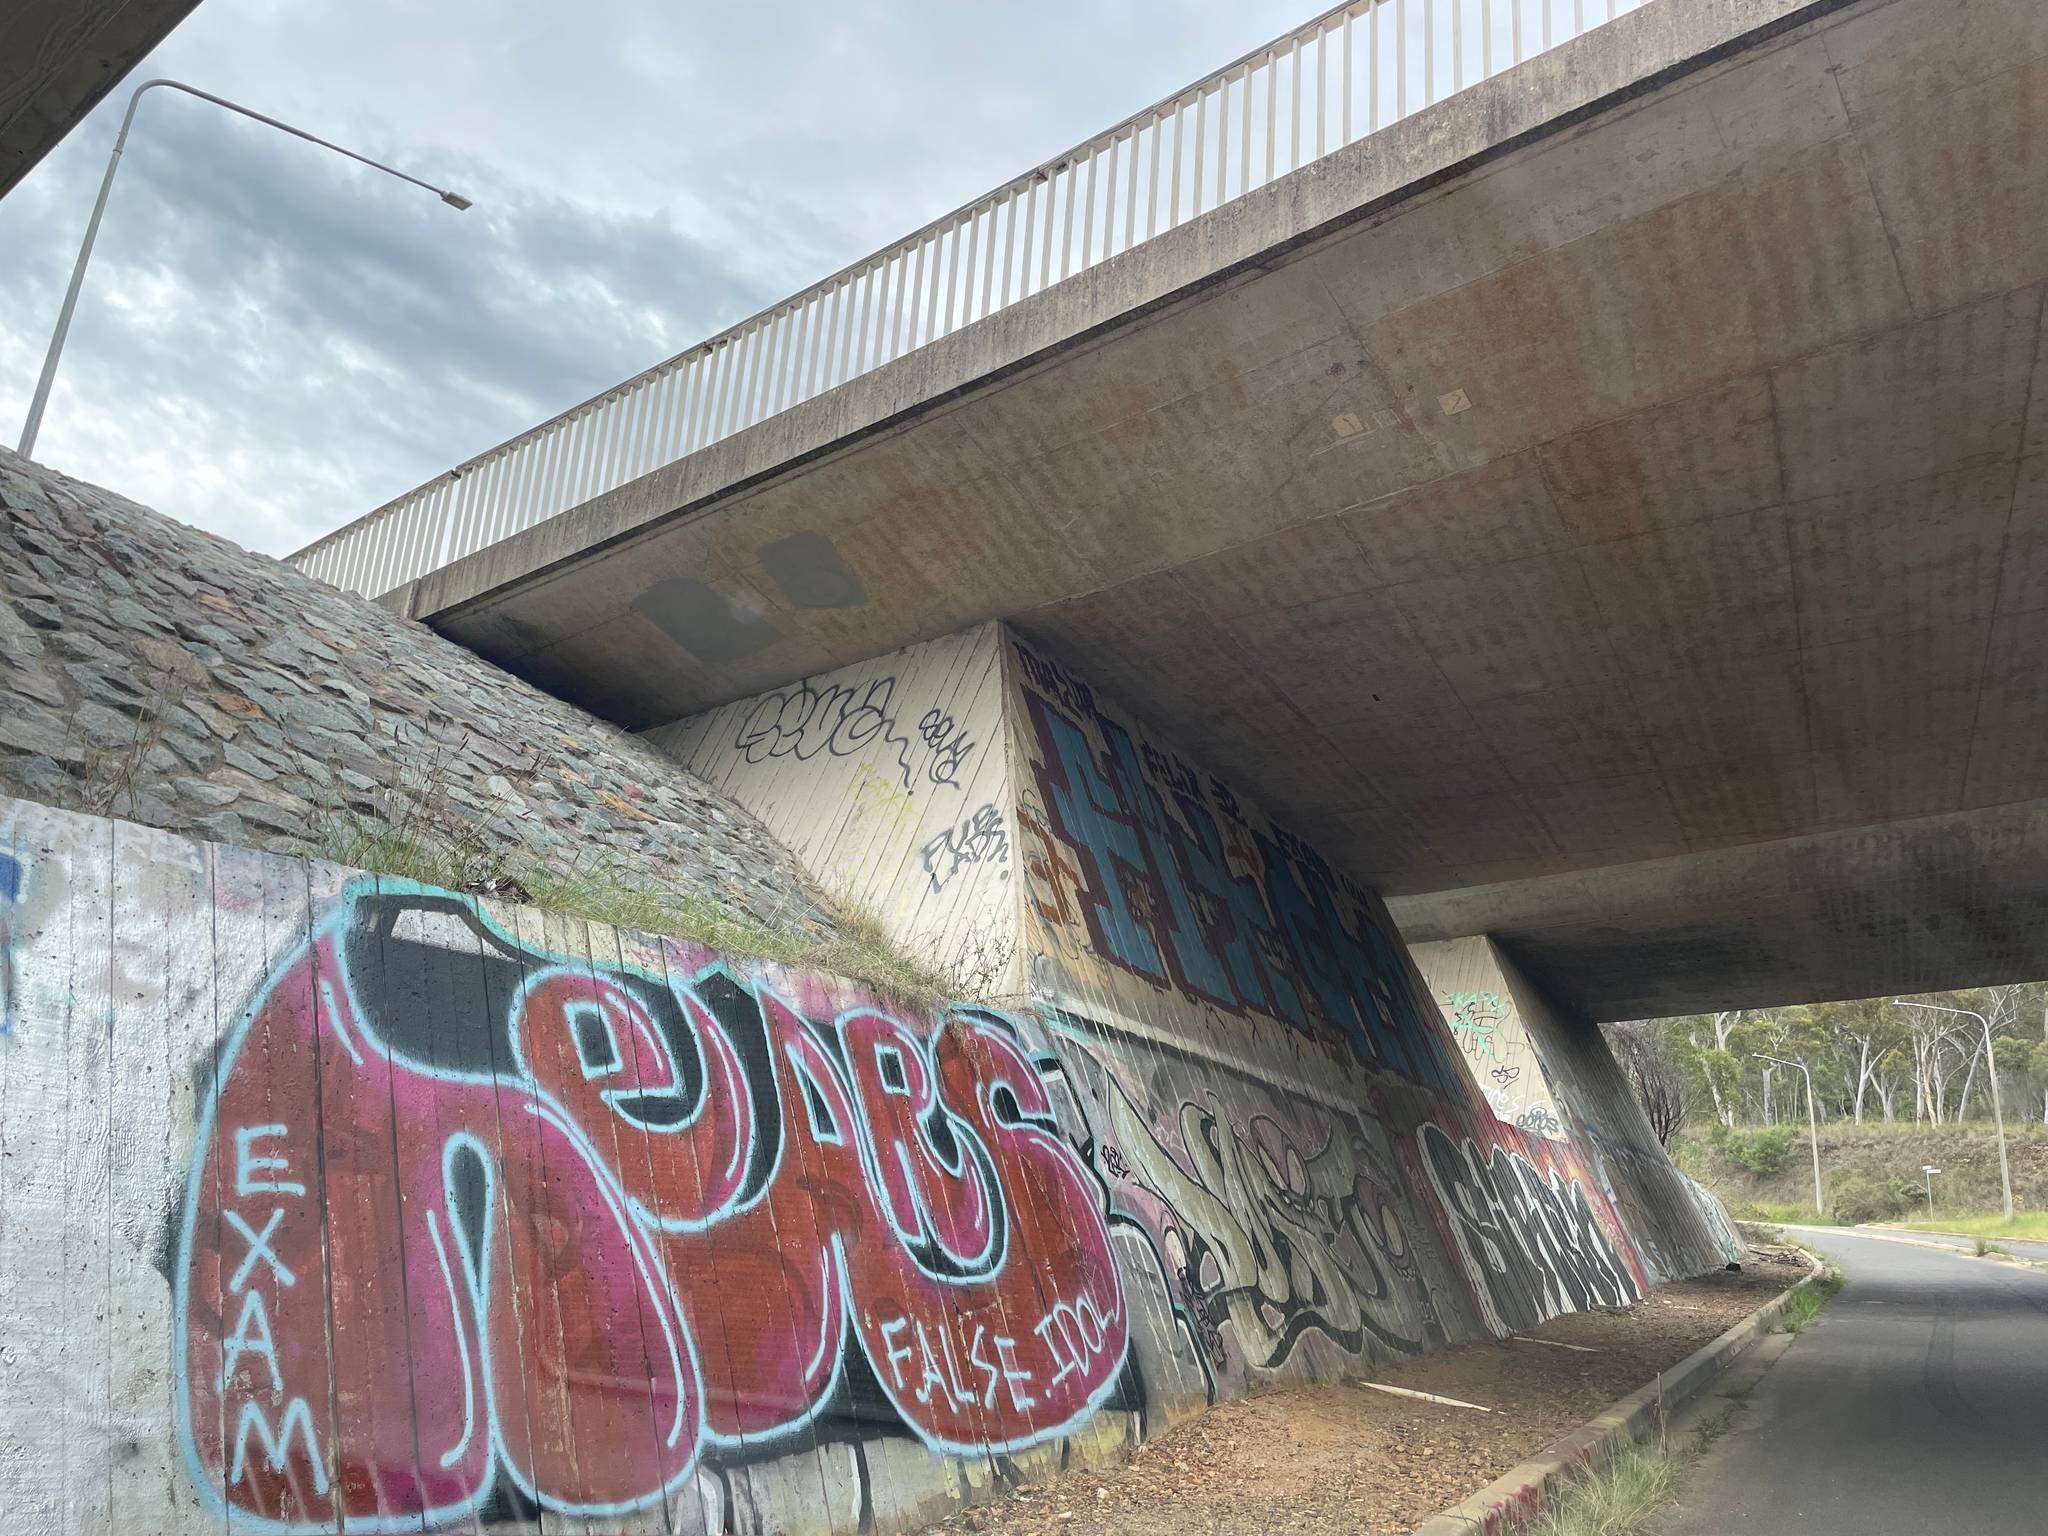 &mdash;Frith Rd Underpass ex-Legal Walls